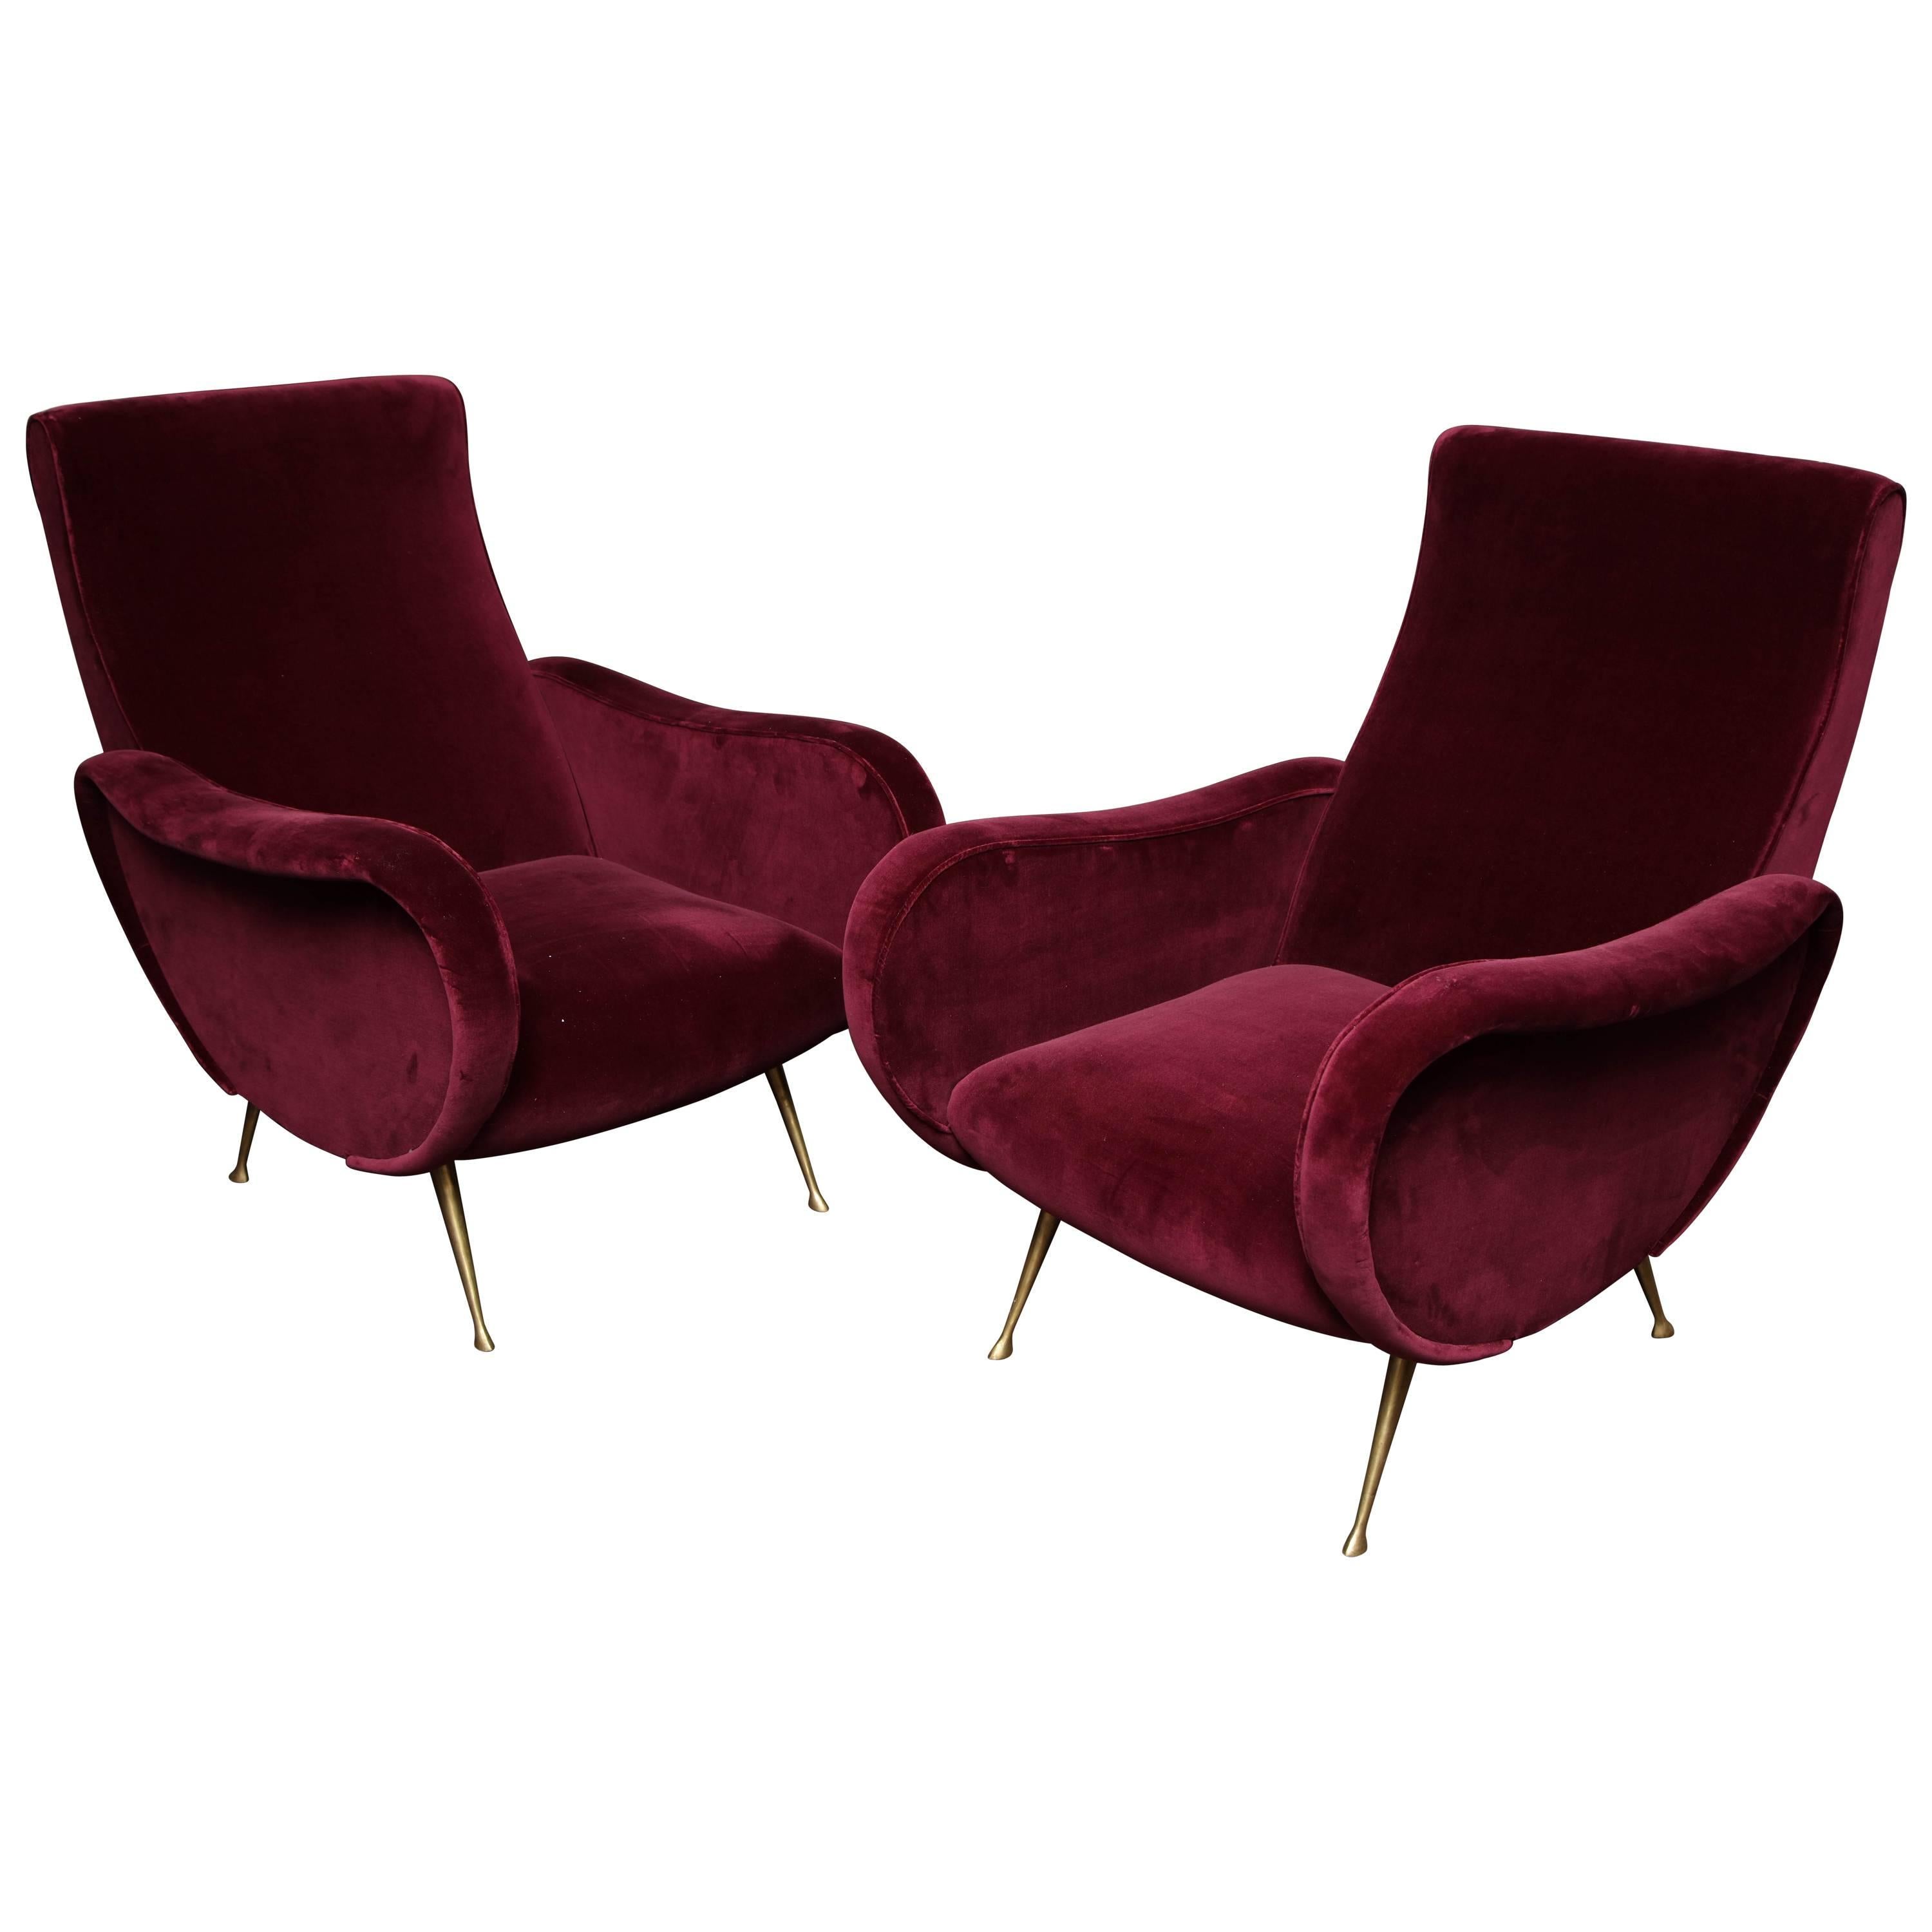 Pair of Vintage Italian Club Chairs Re-Upholstered in Burgundy Velvet